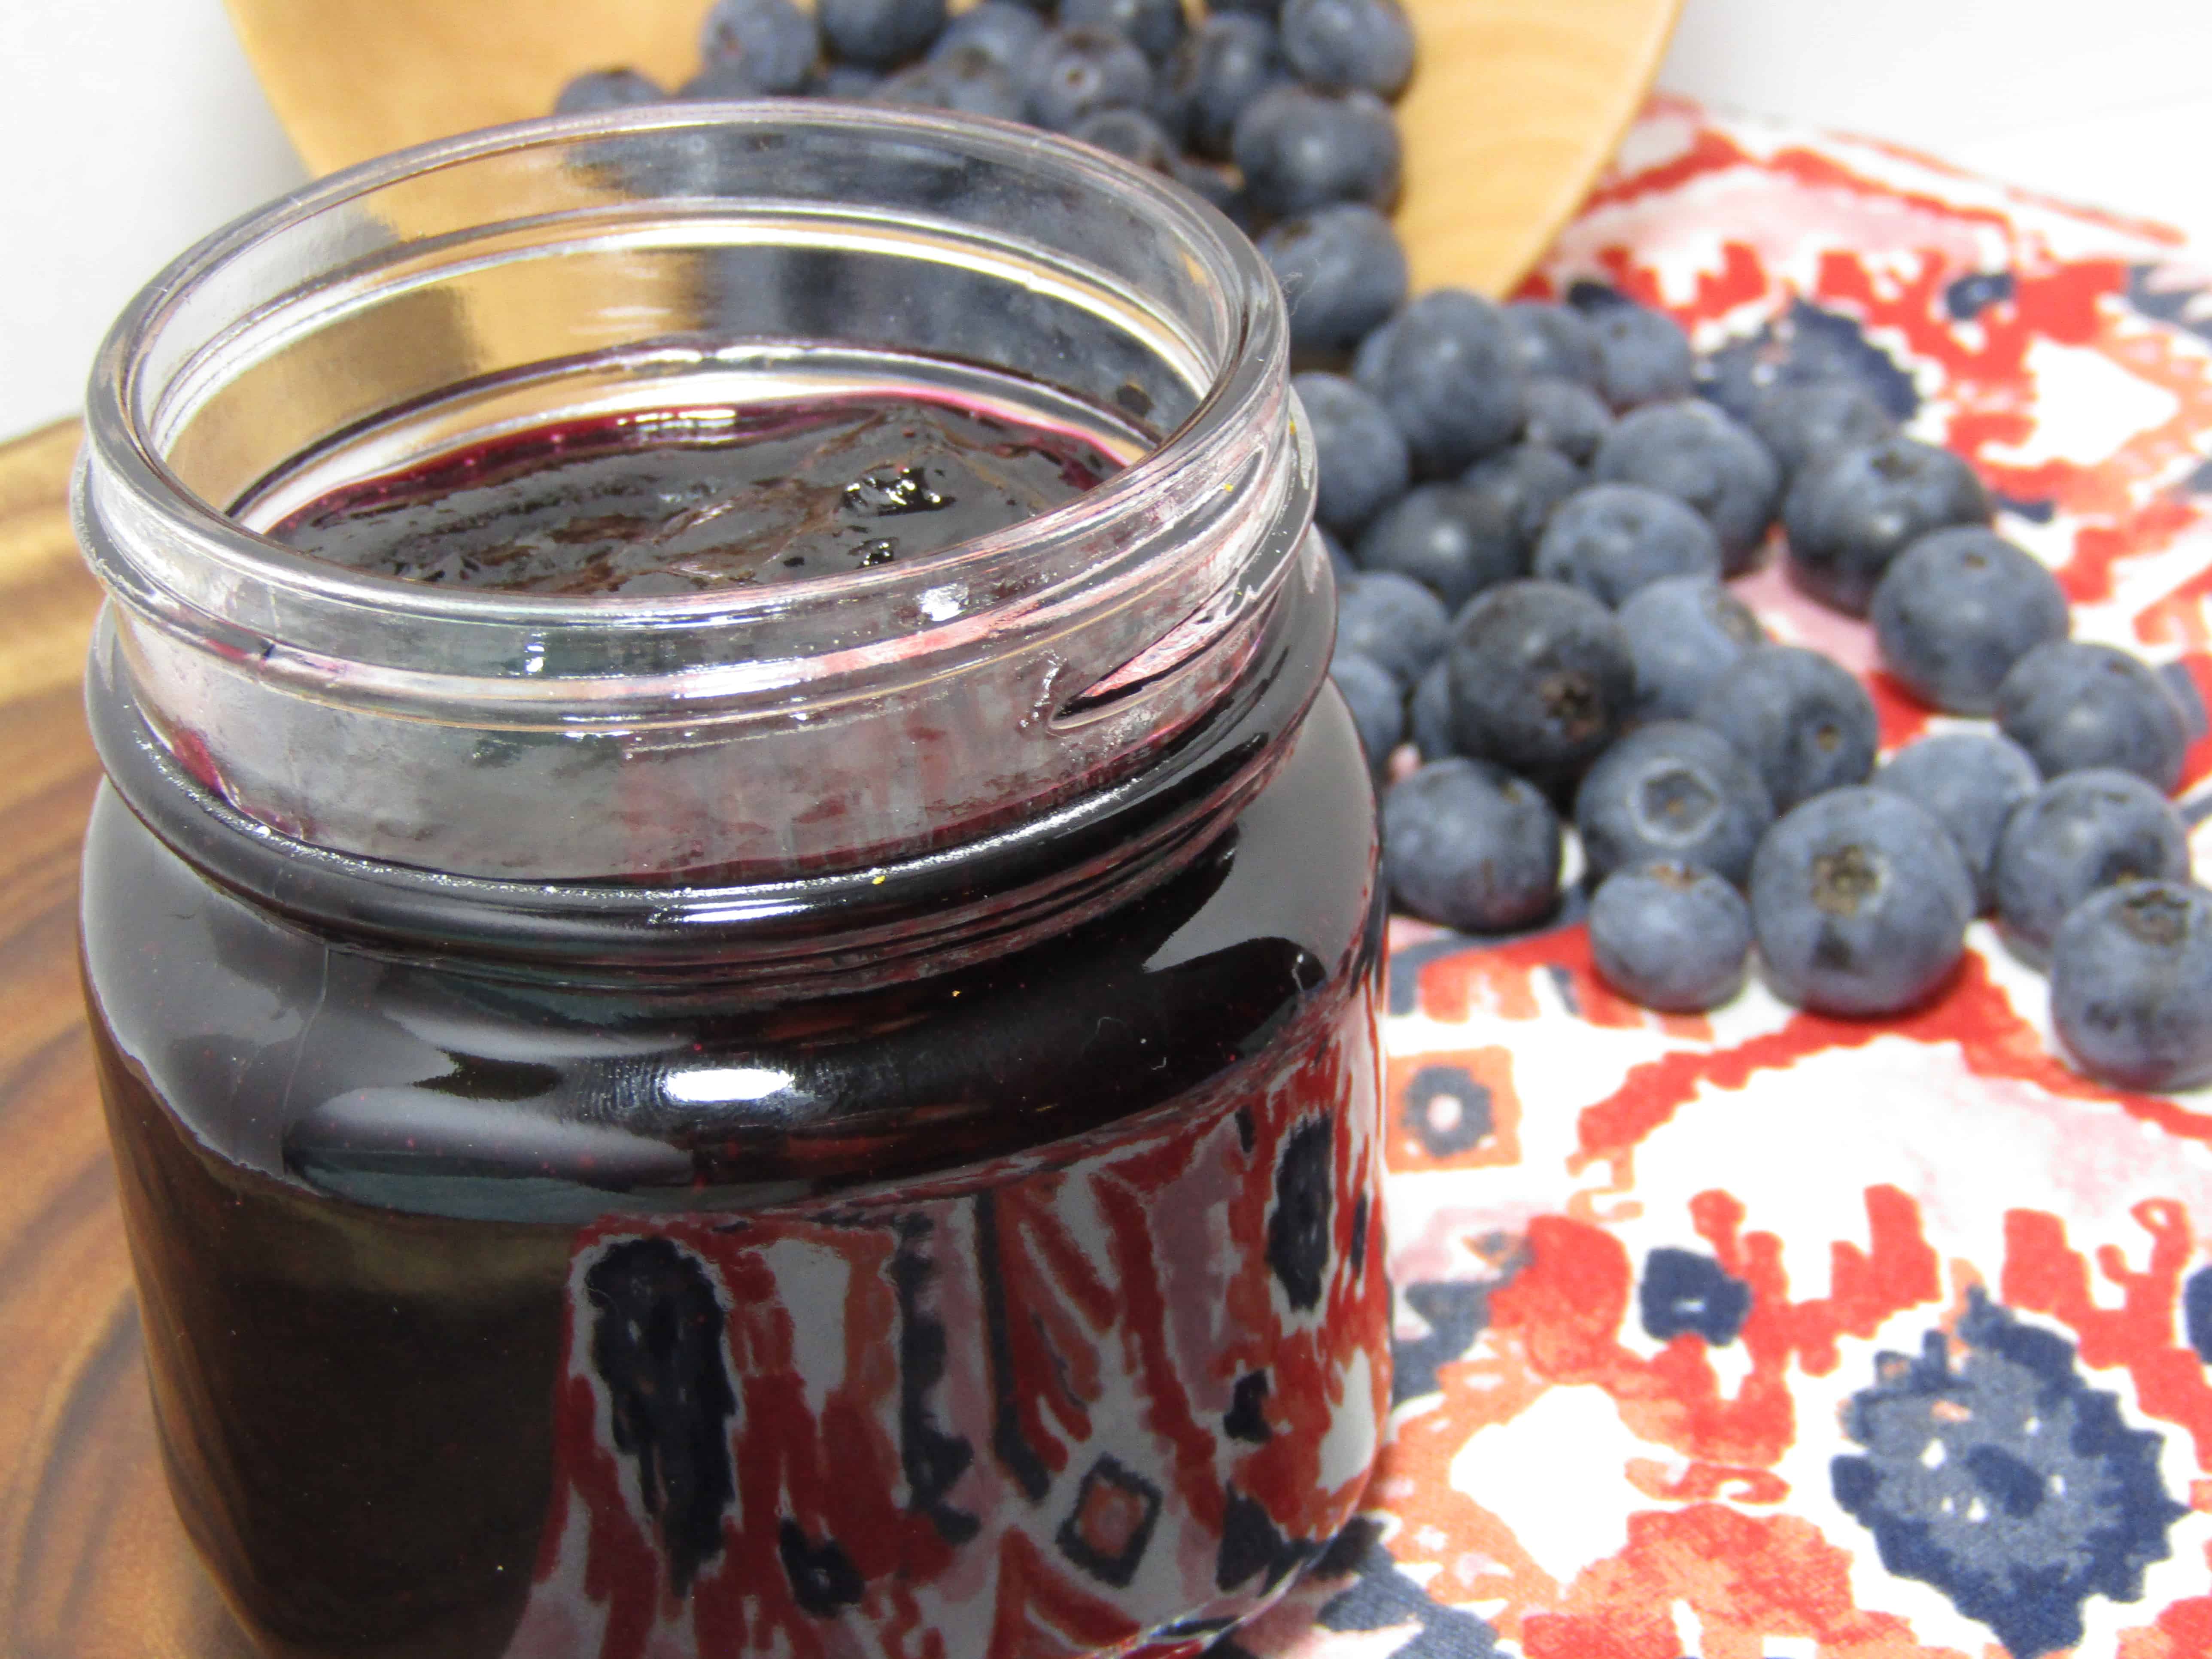 Instant Pot Blueberry Jam